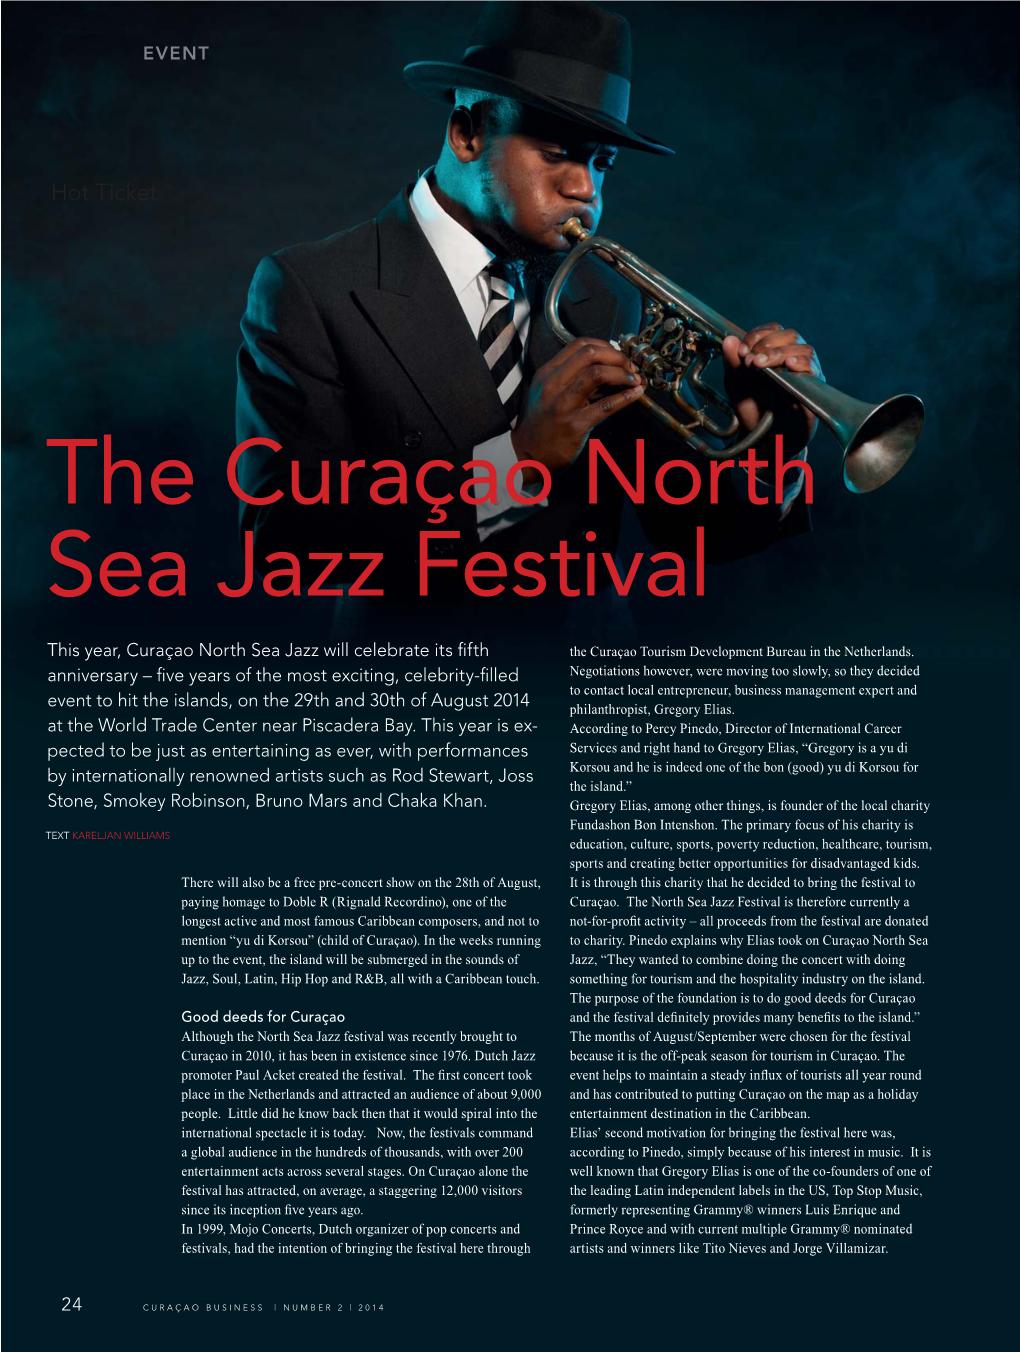 The Curaçao North Sea Jazz Festival